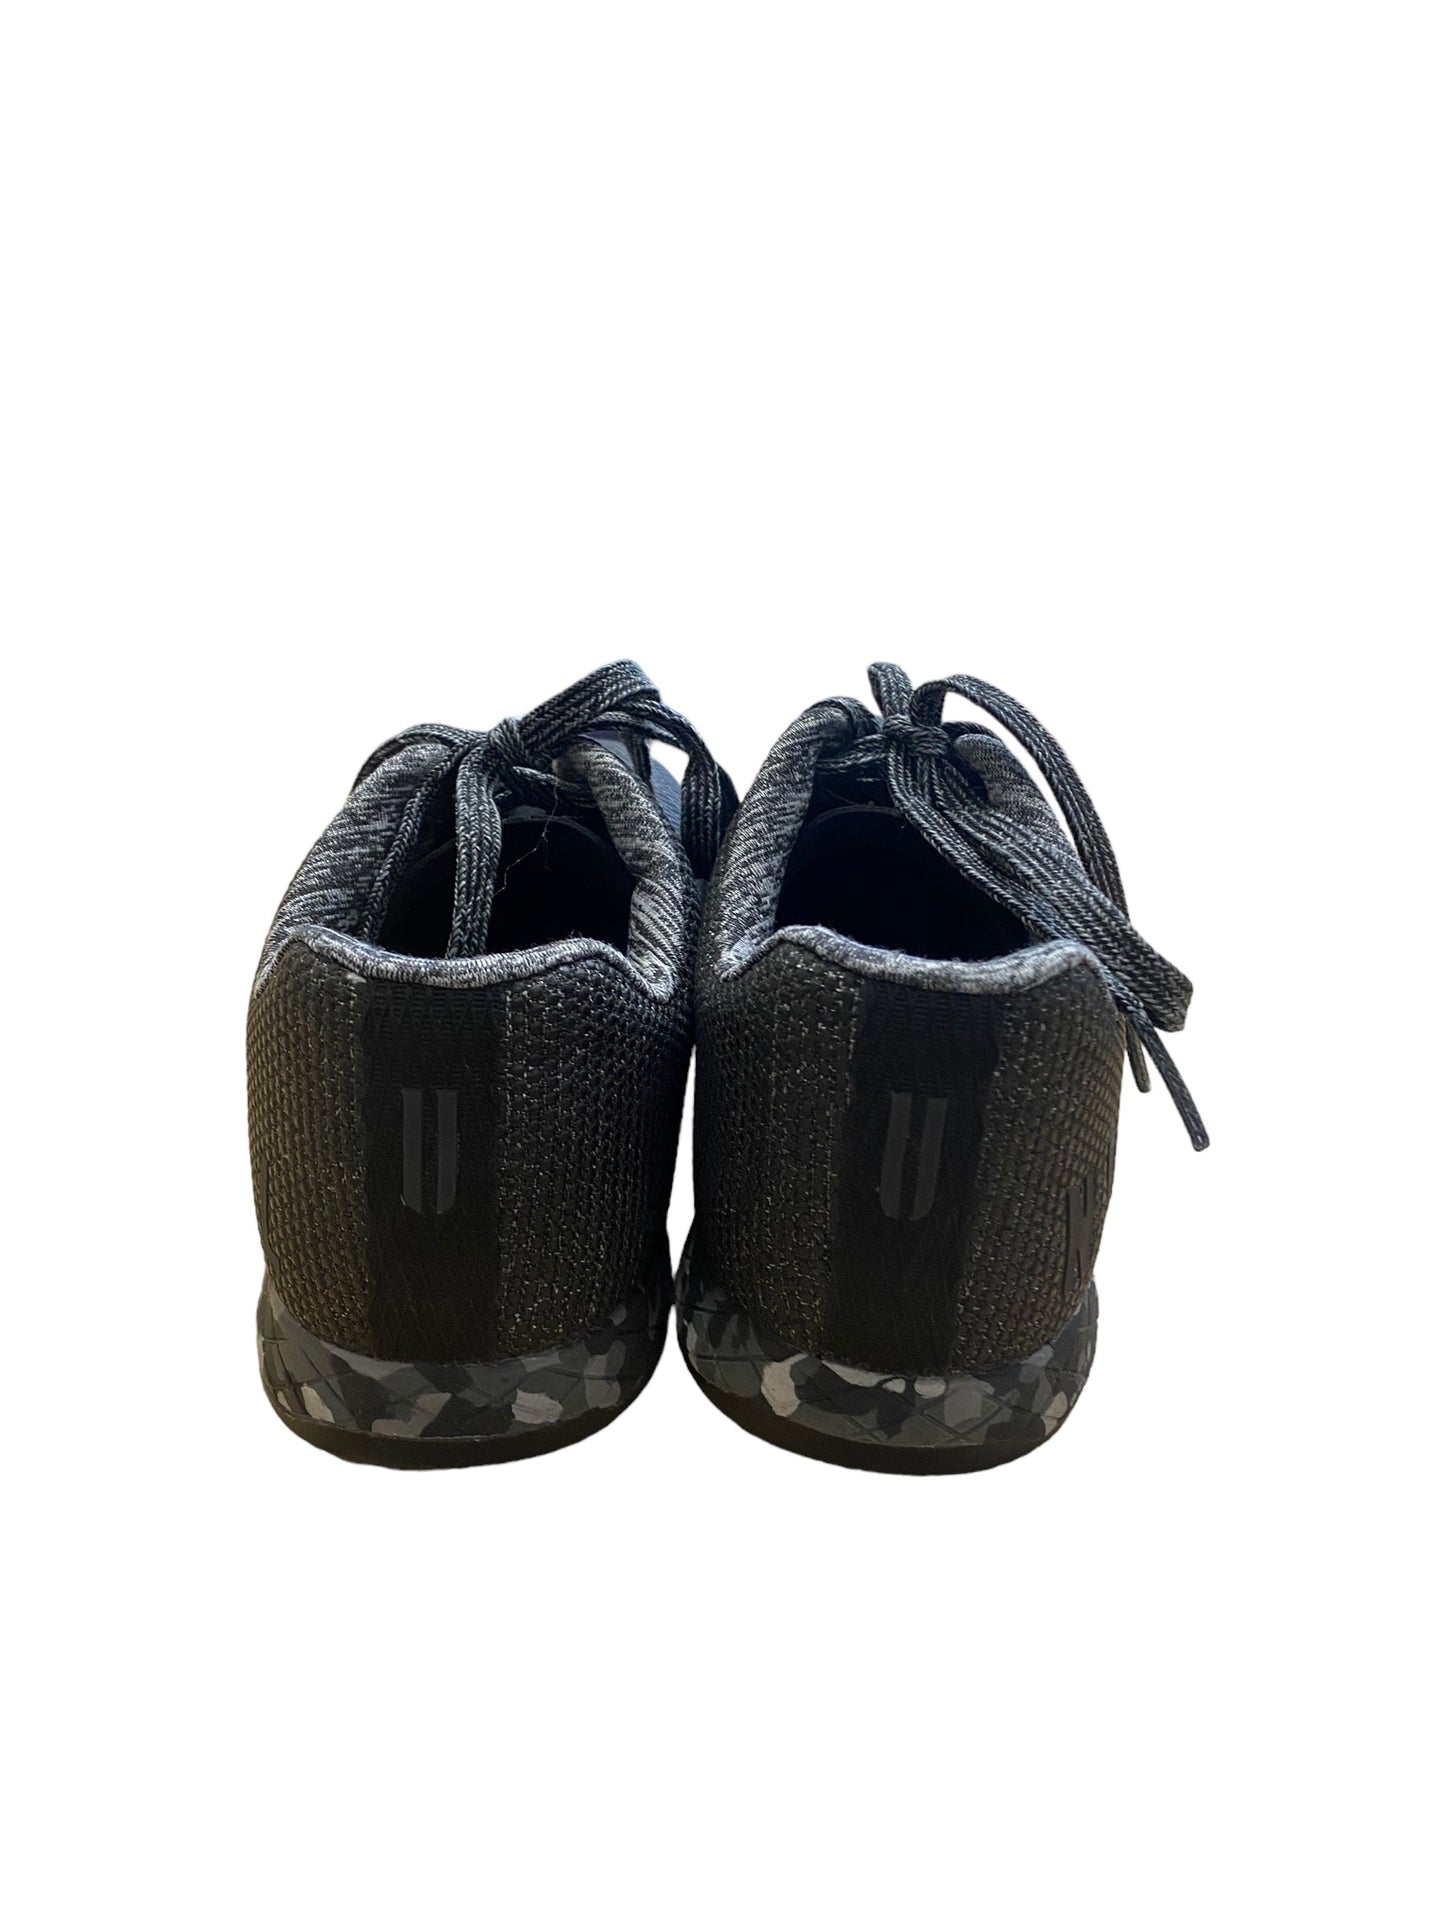 Black Shoes Athletic Clothes Mentor, Size 9